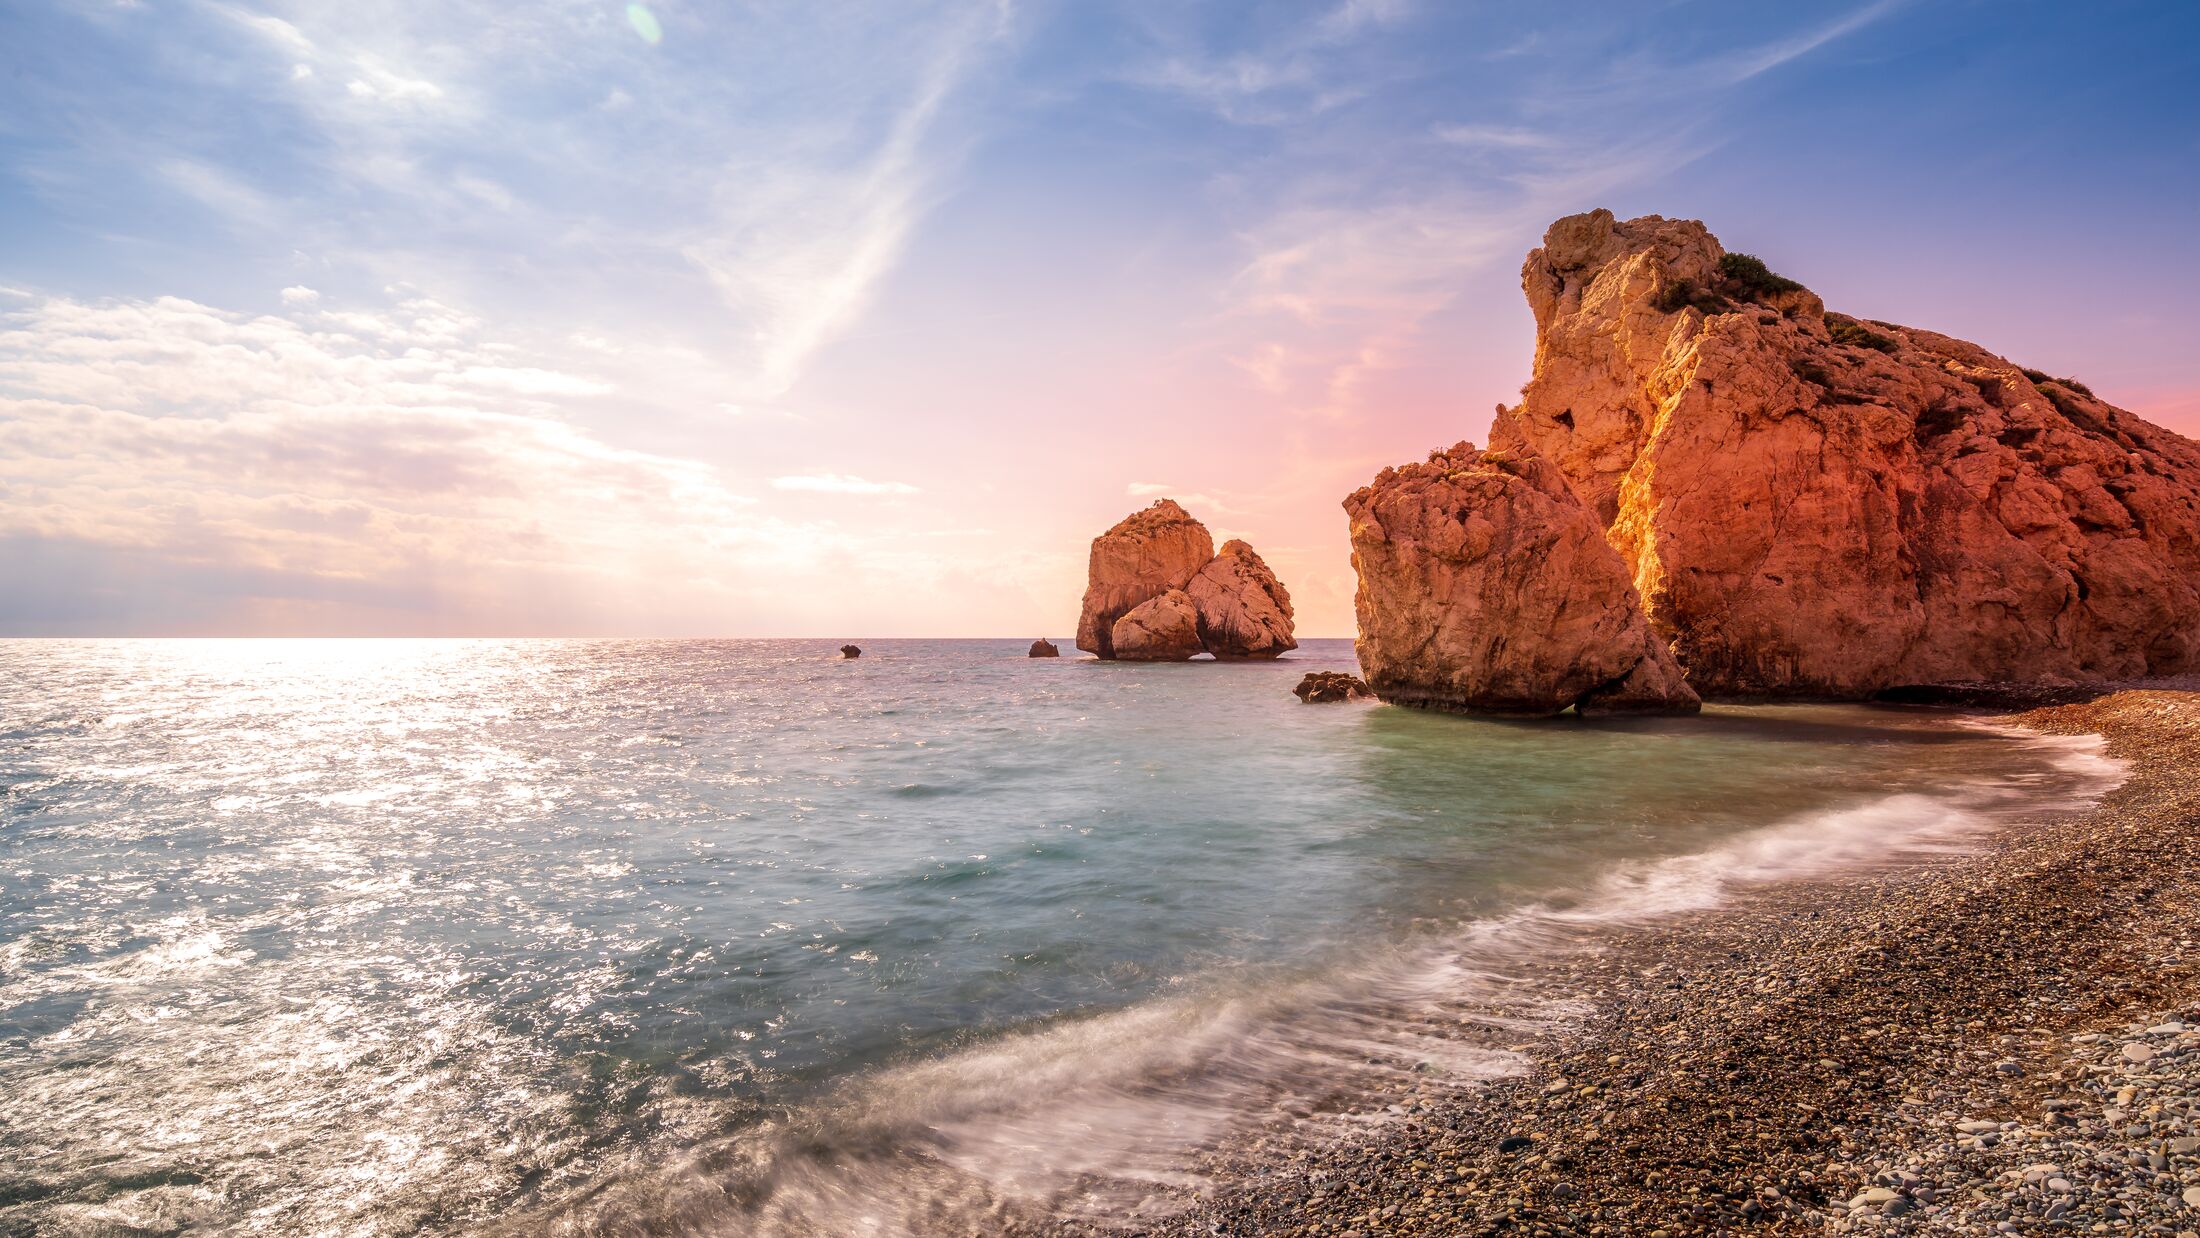 Longtime Exposure Aphrodite's Rock in Cyprus Greece